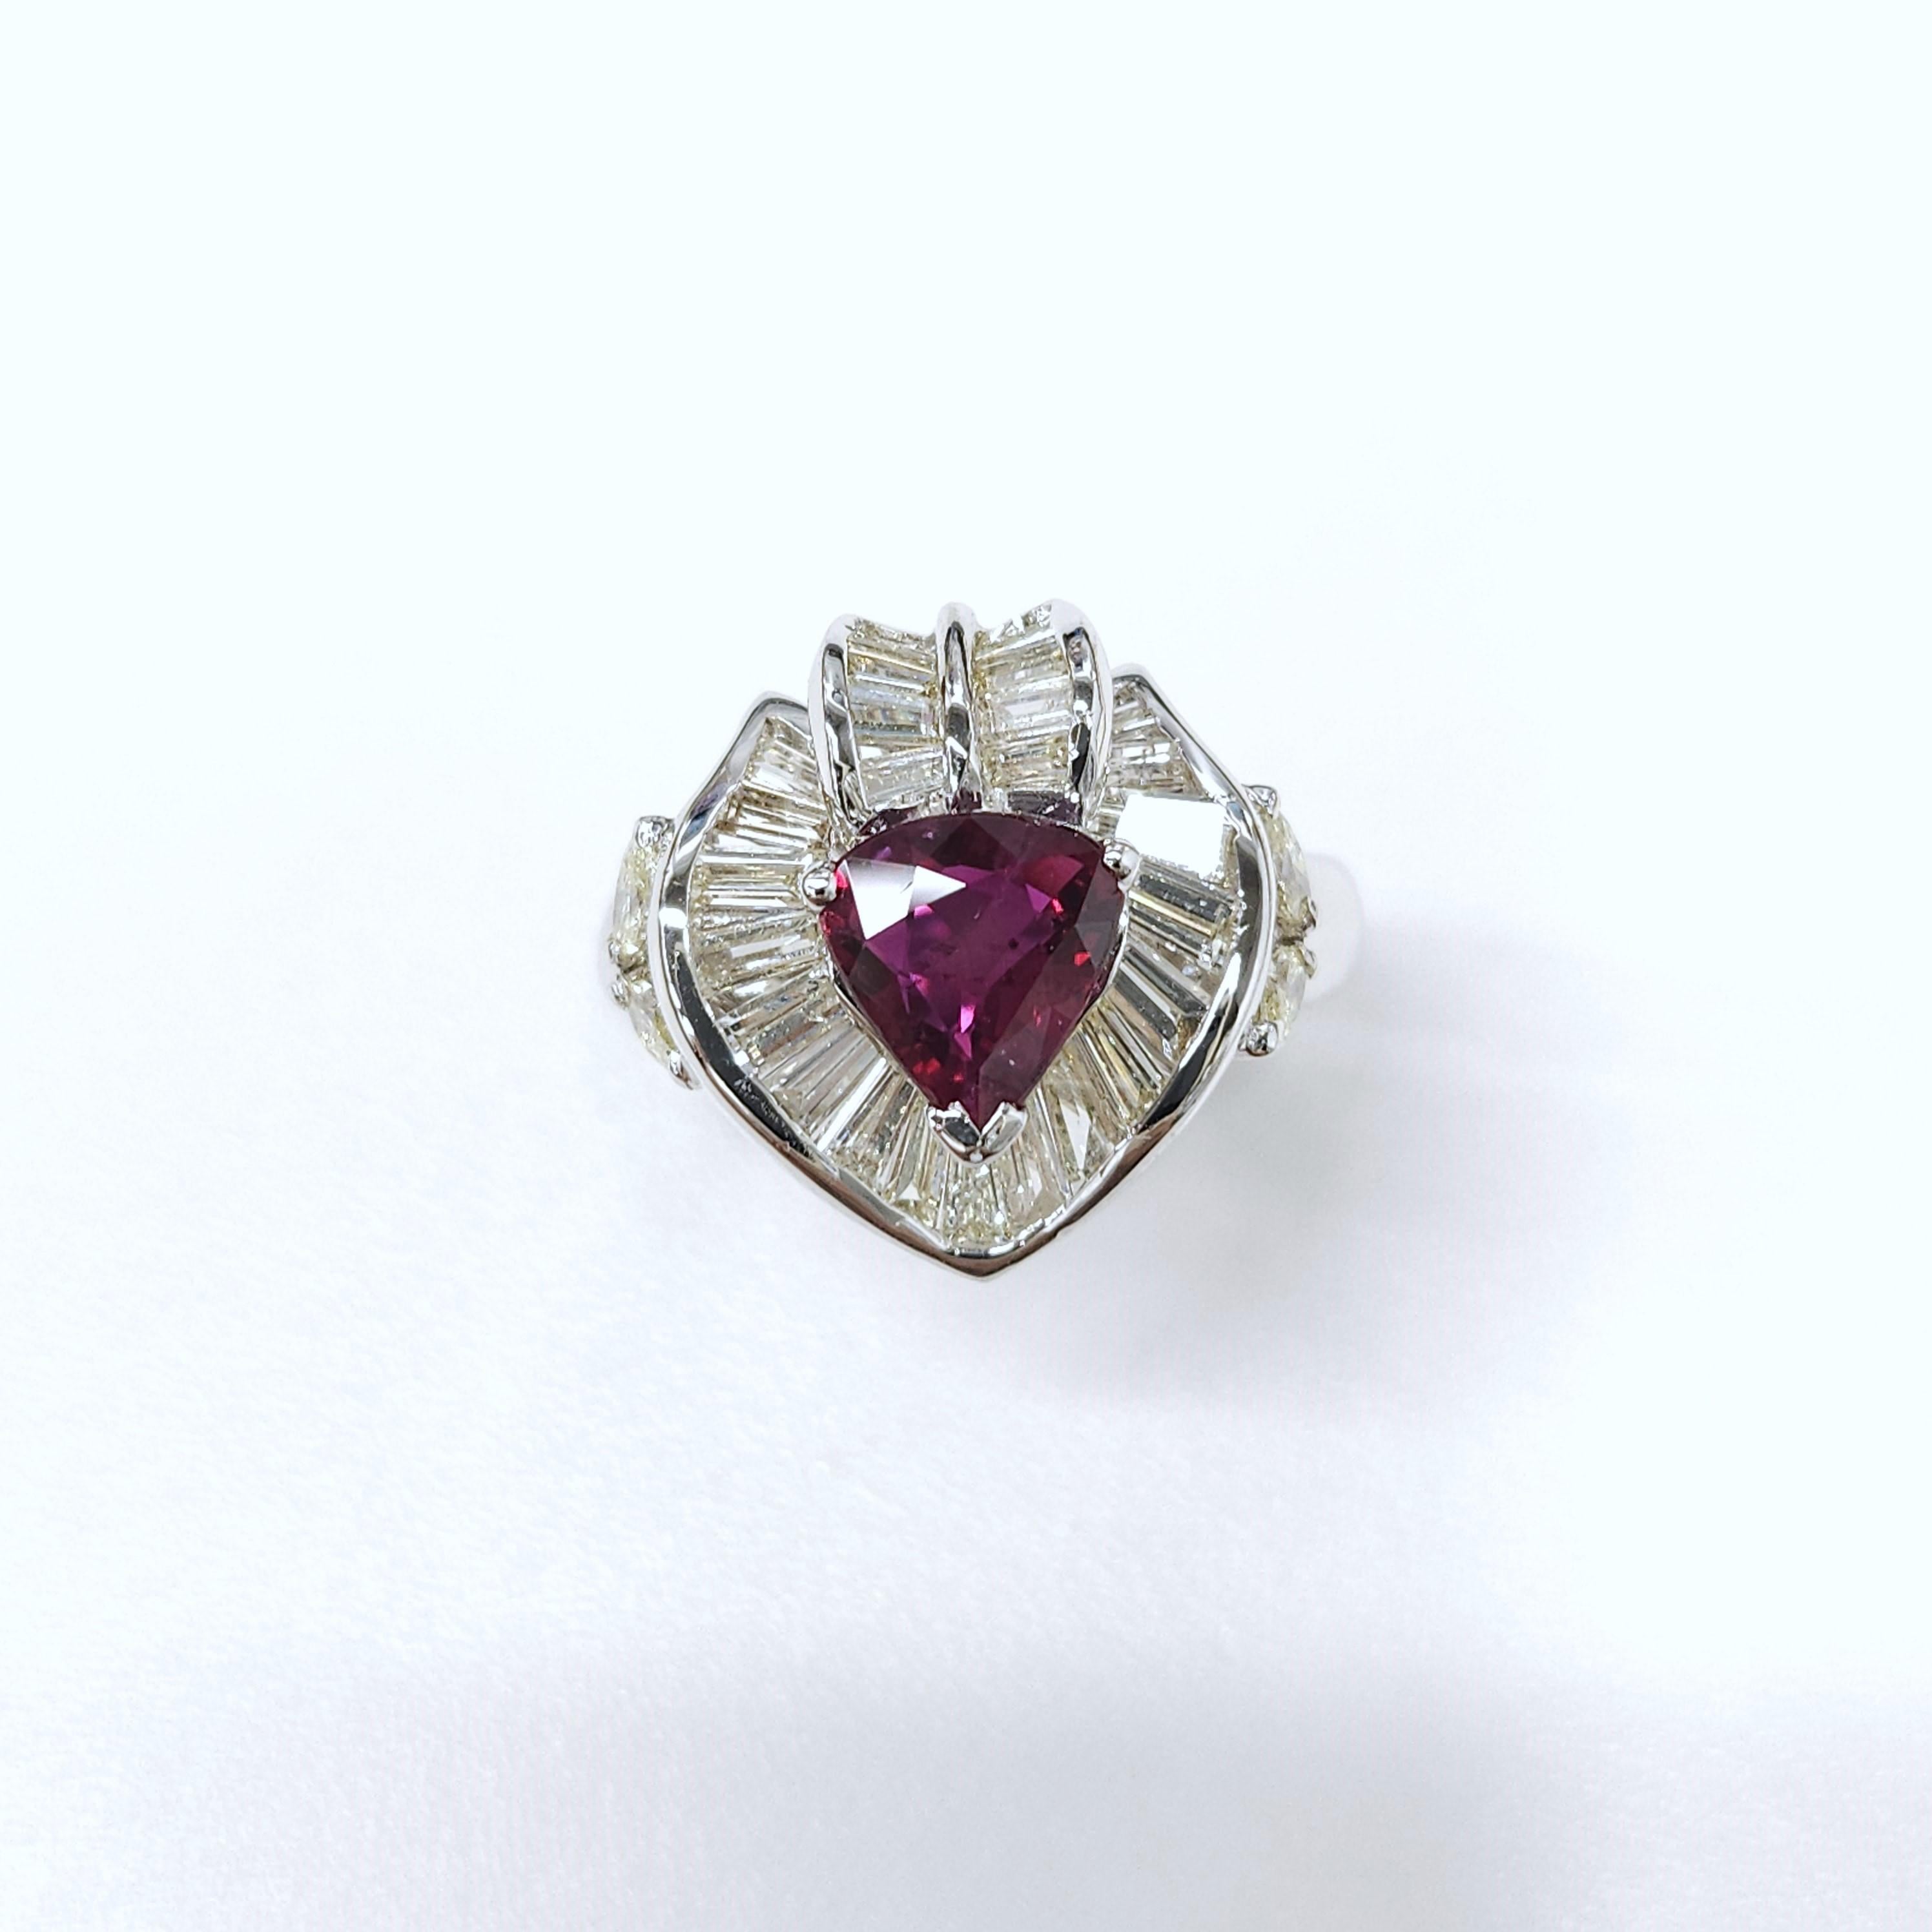 IGI Certified 1.35Carat Ruby & Diamond Ring in 18K White Gold For Sale 6